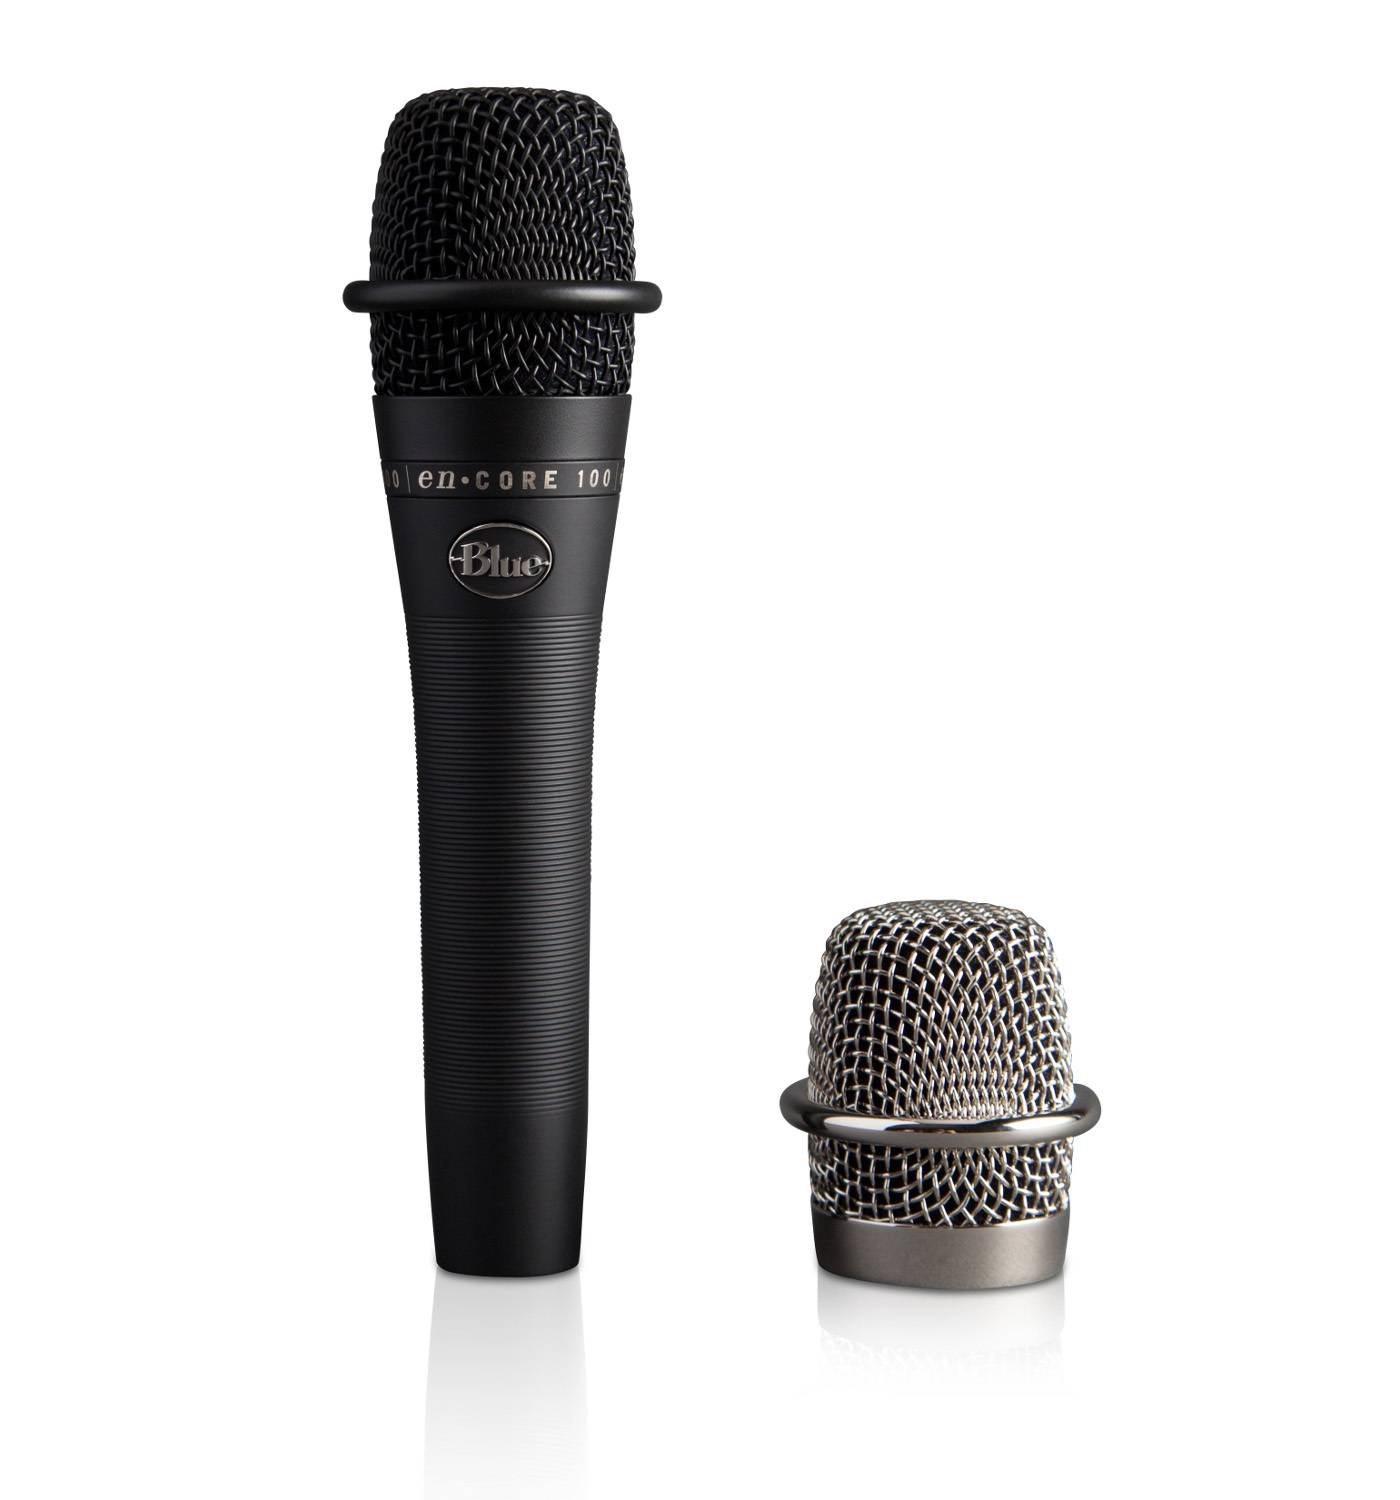 Blue Microphones enCORE 100 Dynamic Microphone